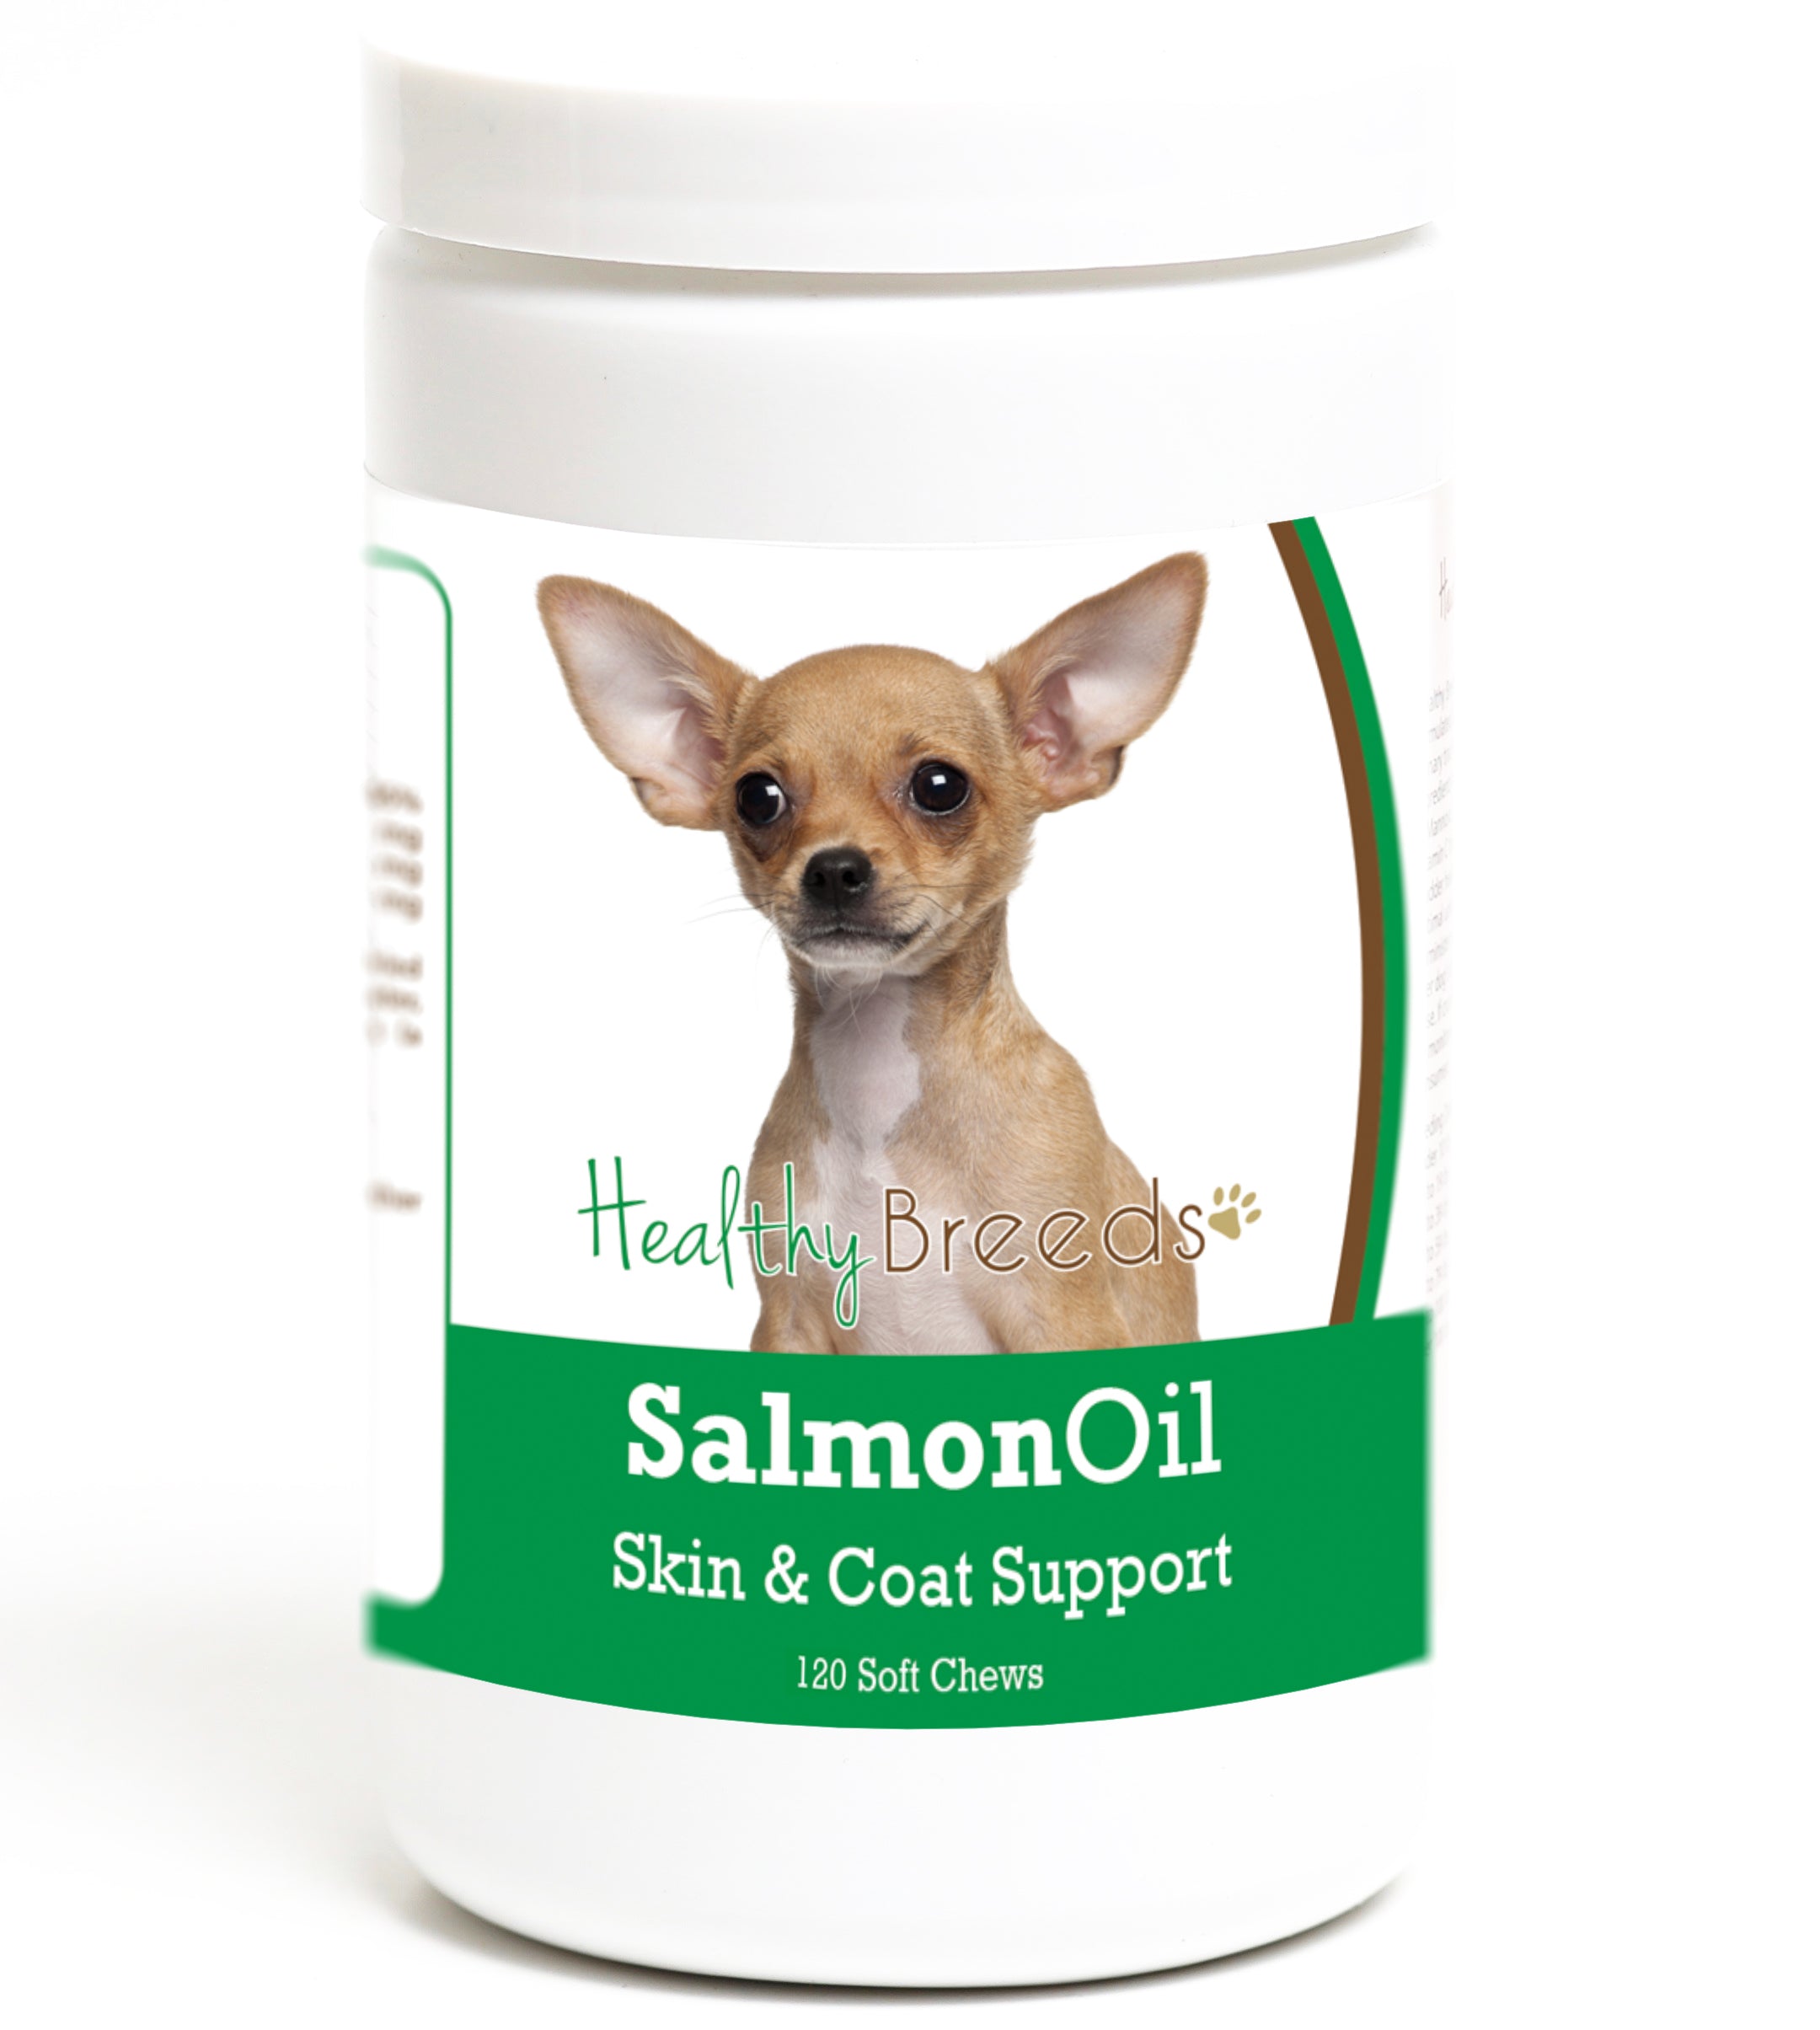 Chihuahua Salmon Oil Soft Chews 120 Count